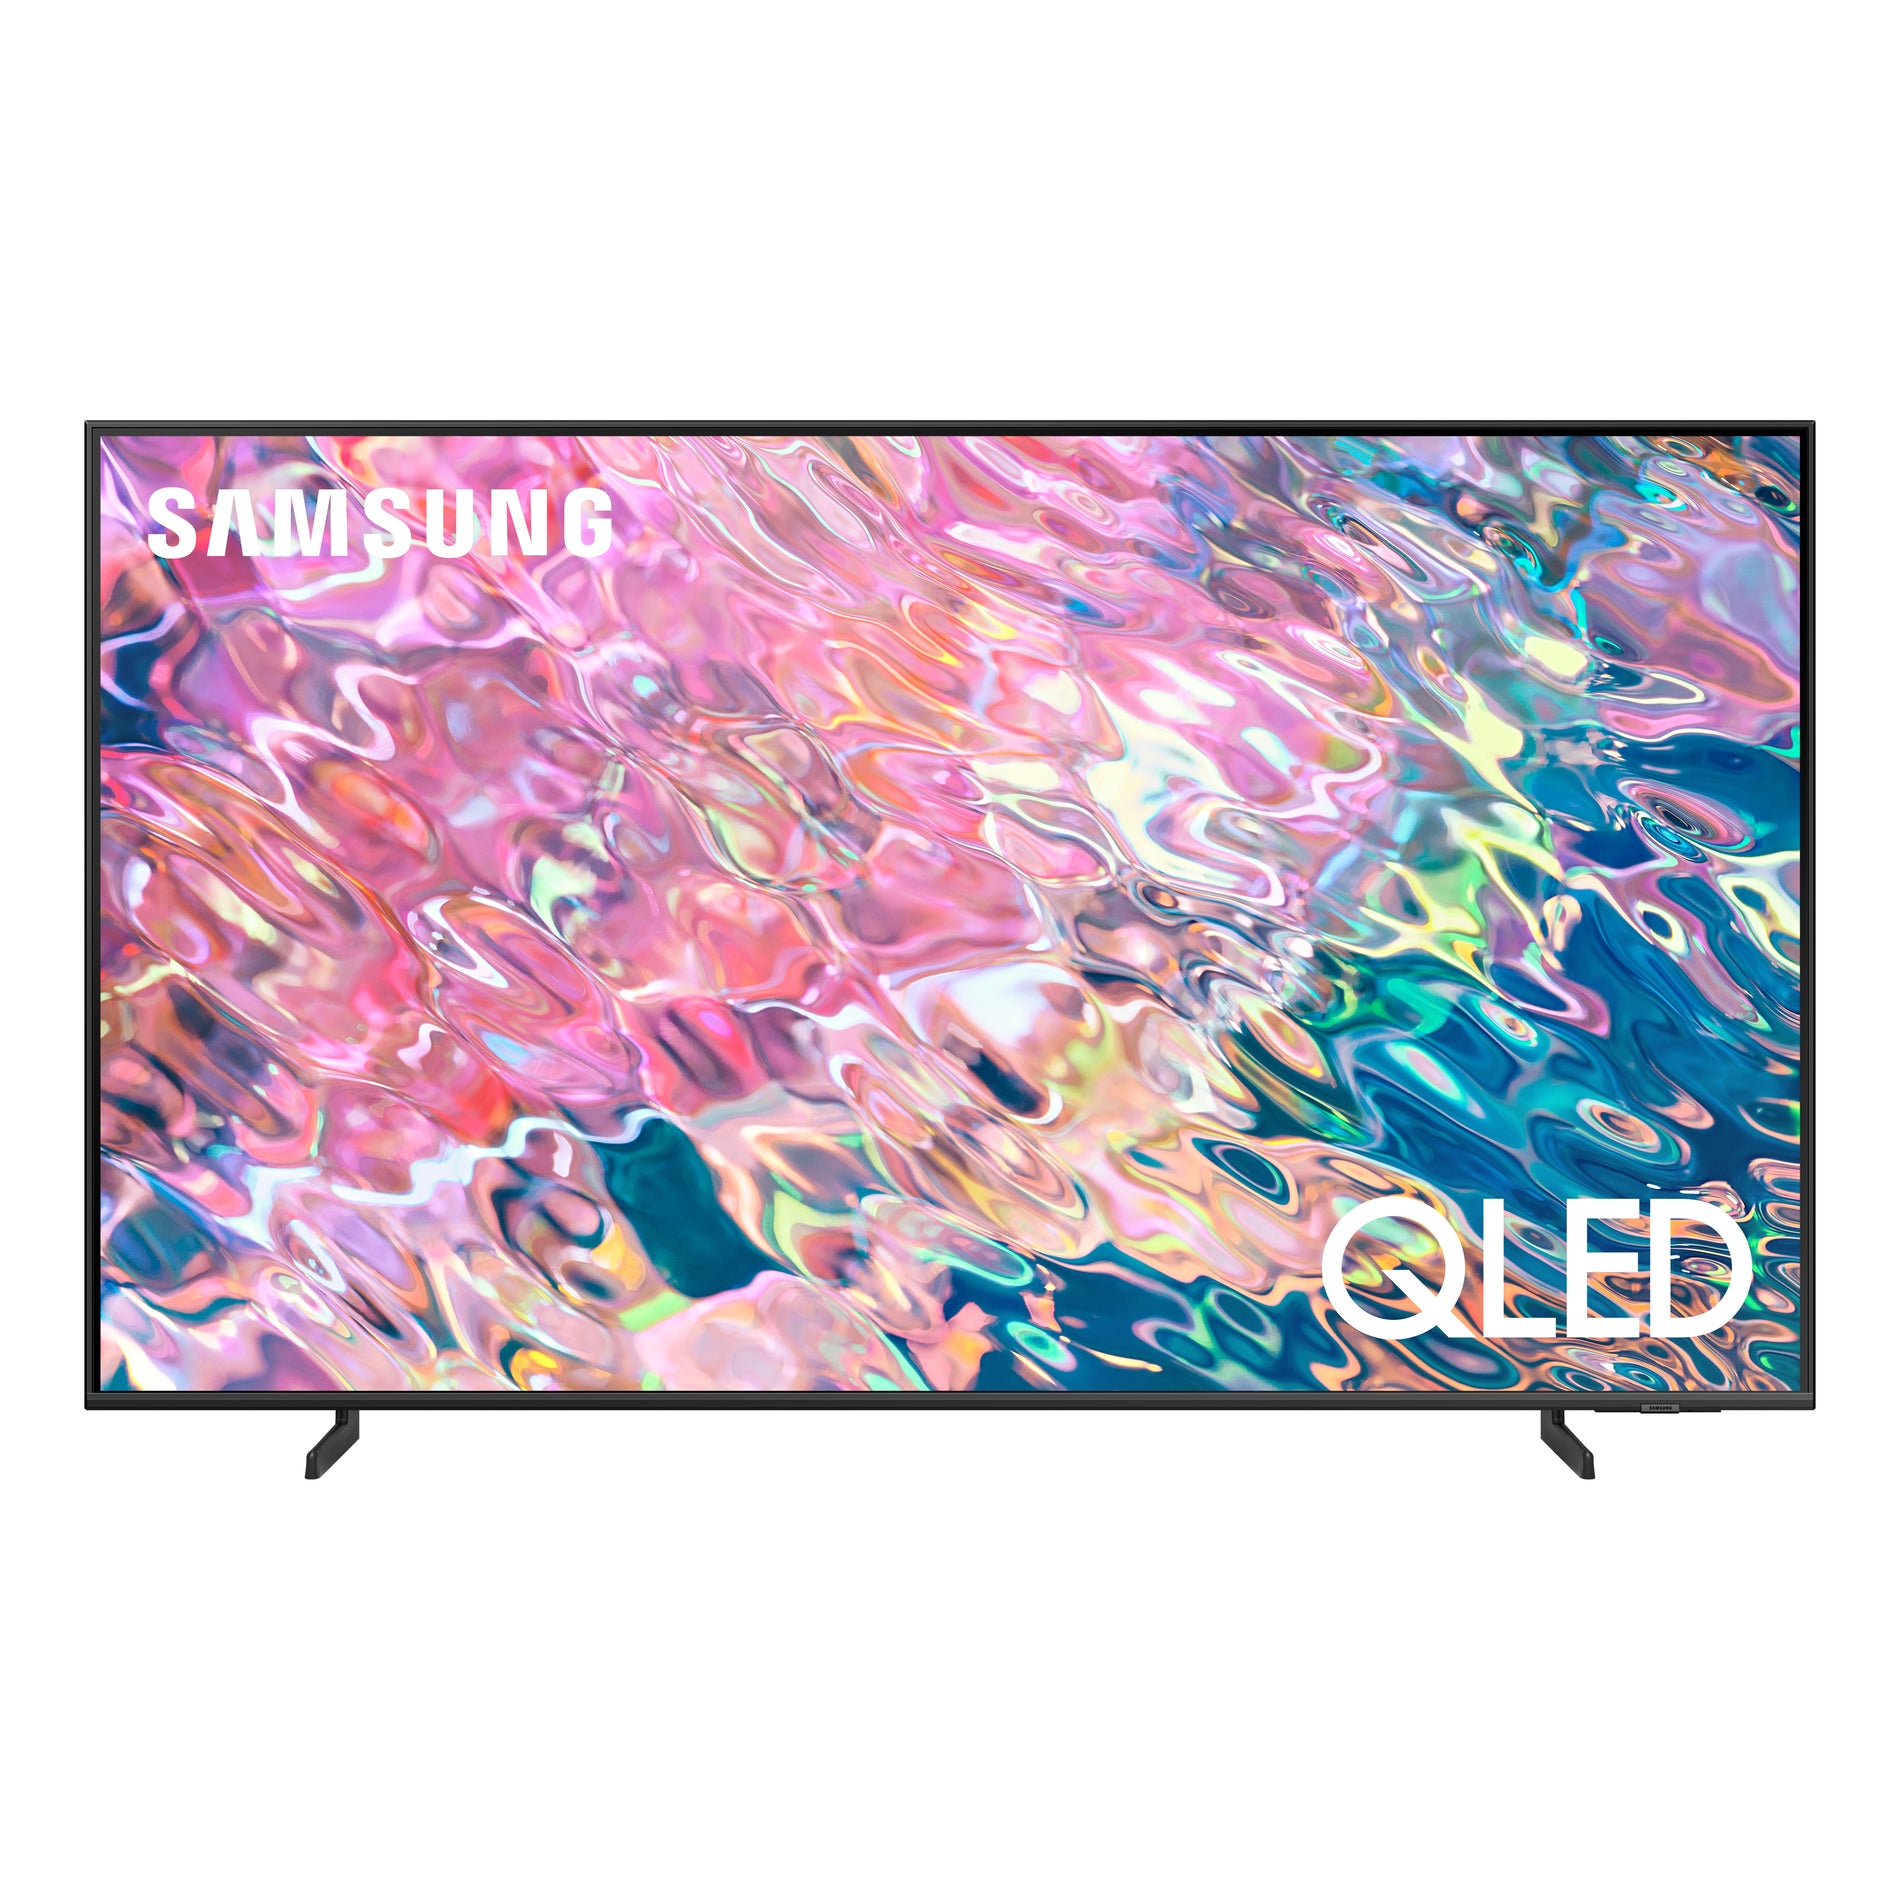 Samsung QN60Q60BAFXZA 60" QLED 4K Smart TV, Dual LED, 3 HDMI Ports, Color Volume 100%, Quantum Processor Lite 4K with AI Upscaling, Object Tracking Sound, Ambient Mode